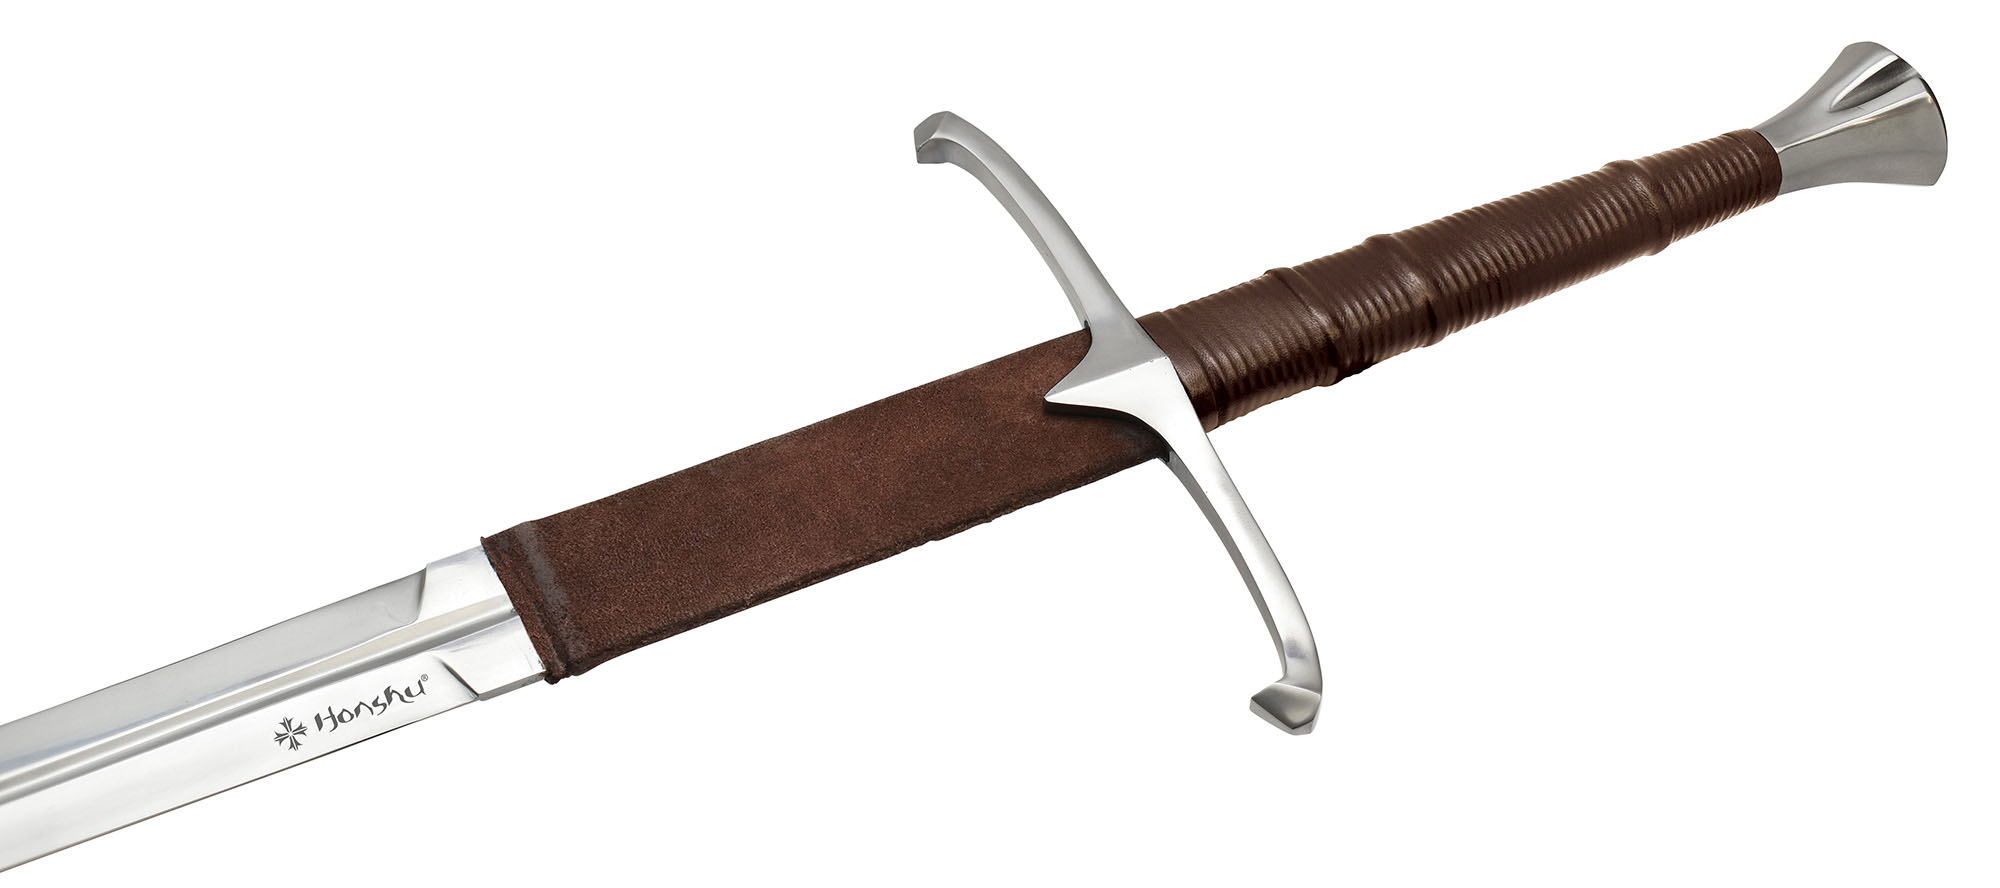 Honshu Historical Claymore Sword with Sheath